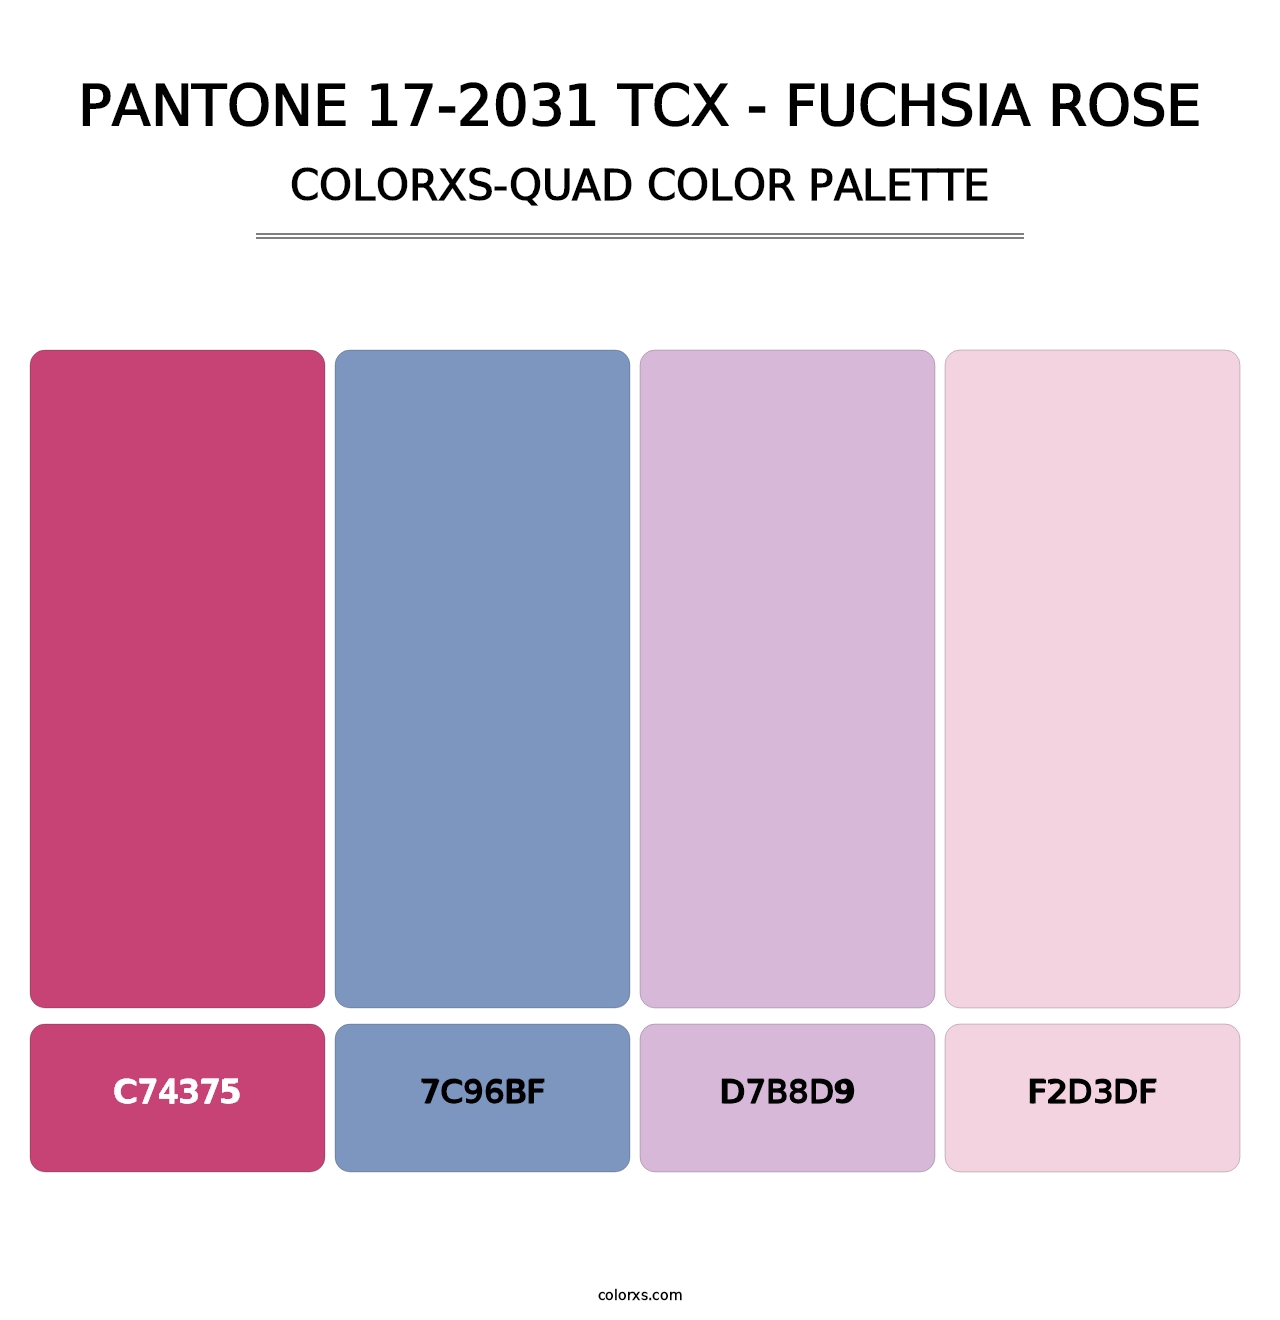 PANTONE 17-2031 TCX - Fuchsia Rose - Colorxs Quad Palette